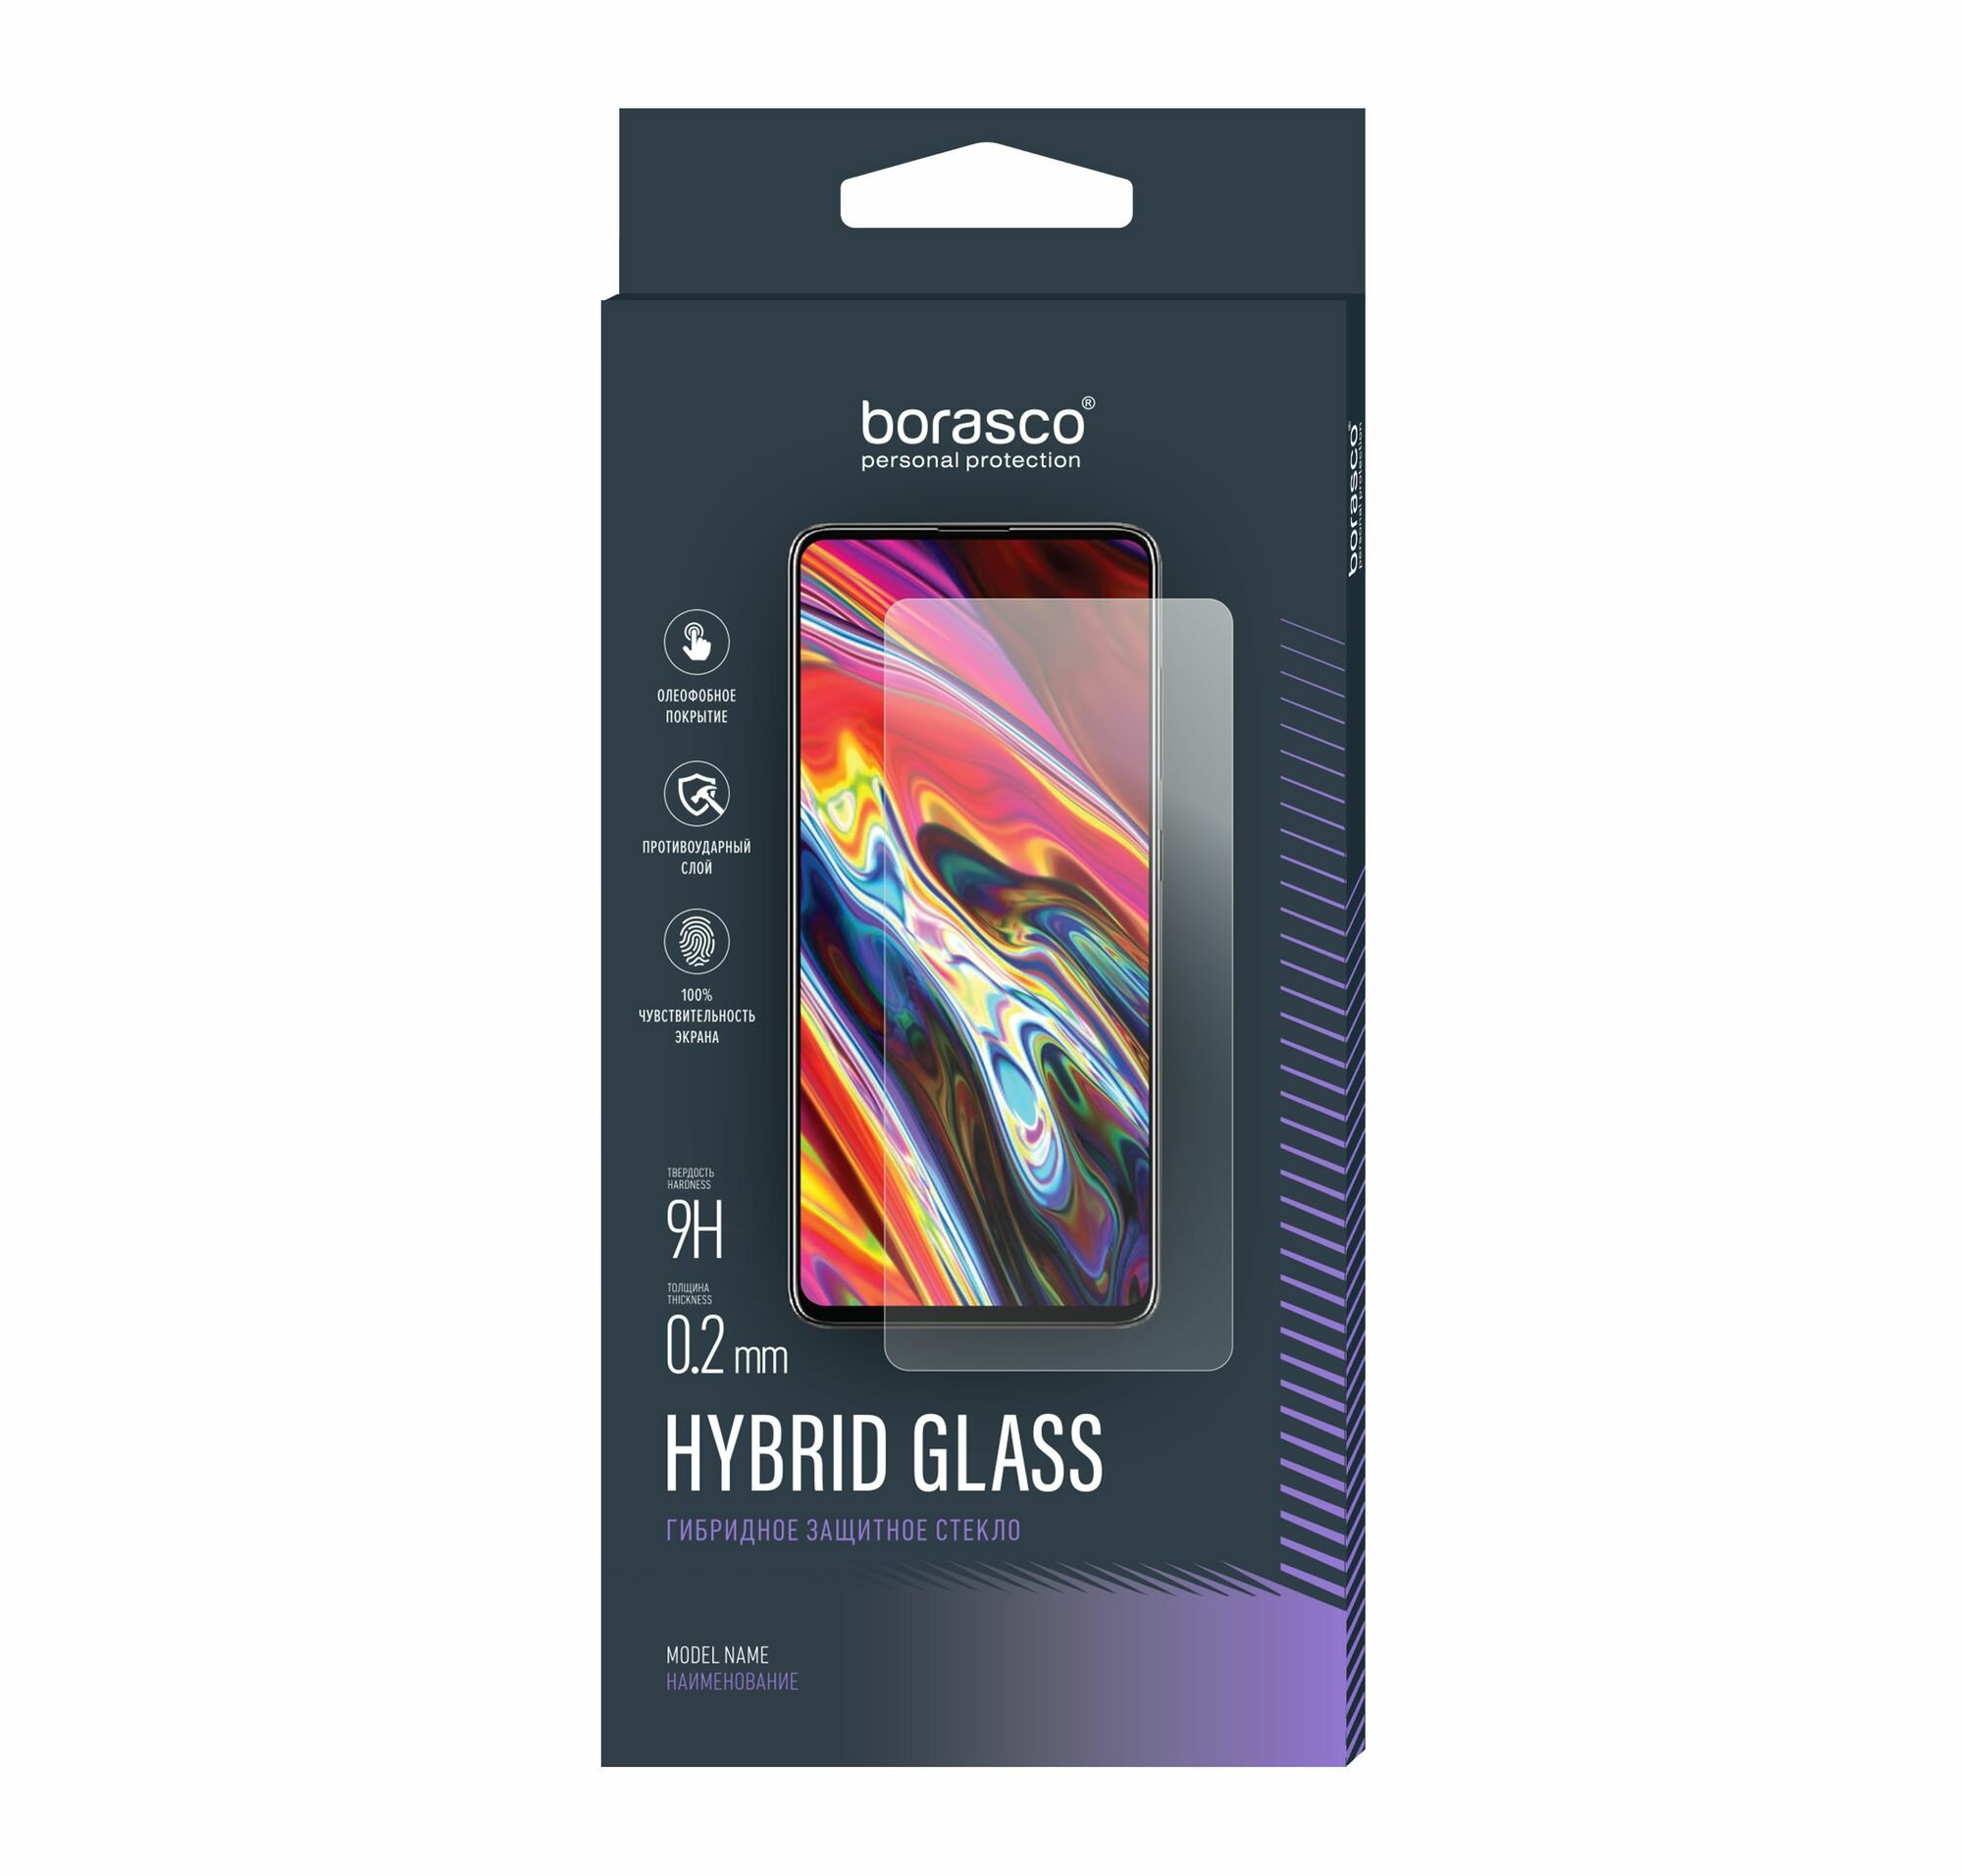 Стекло защитное Hybrid Glass VSP 026 мм для Huawei MediaPad M2 LTE